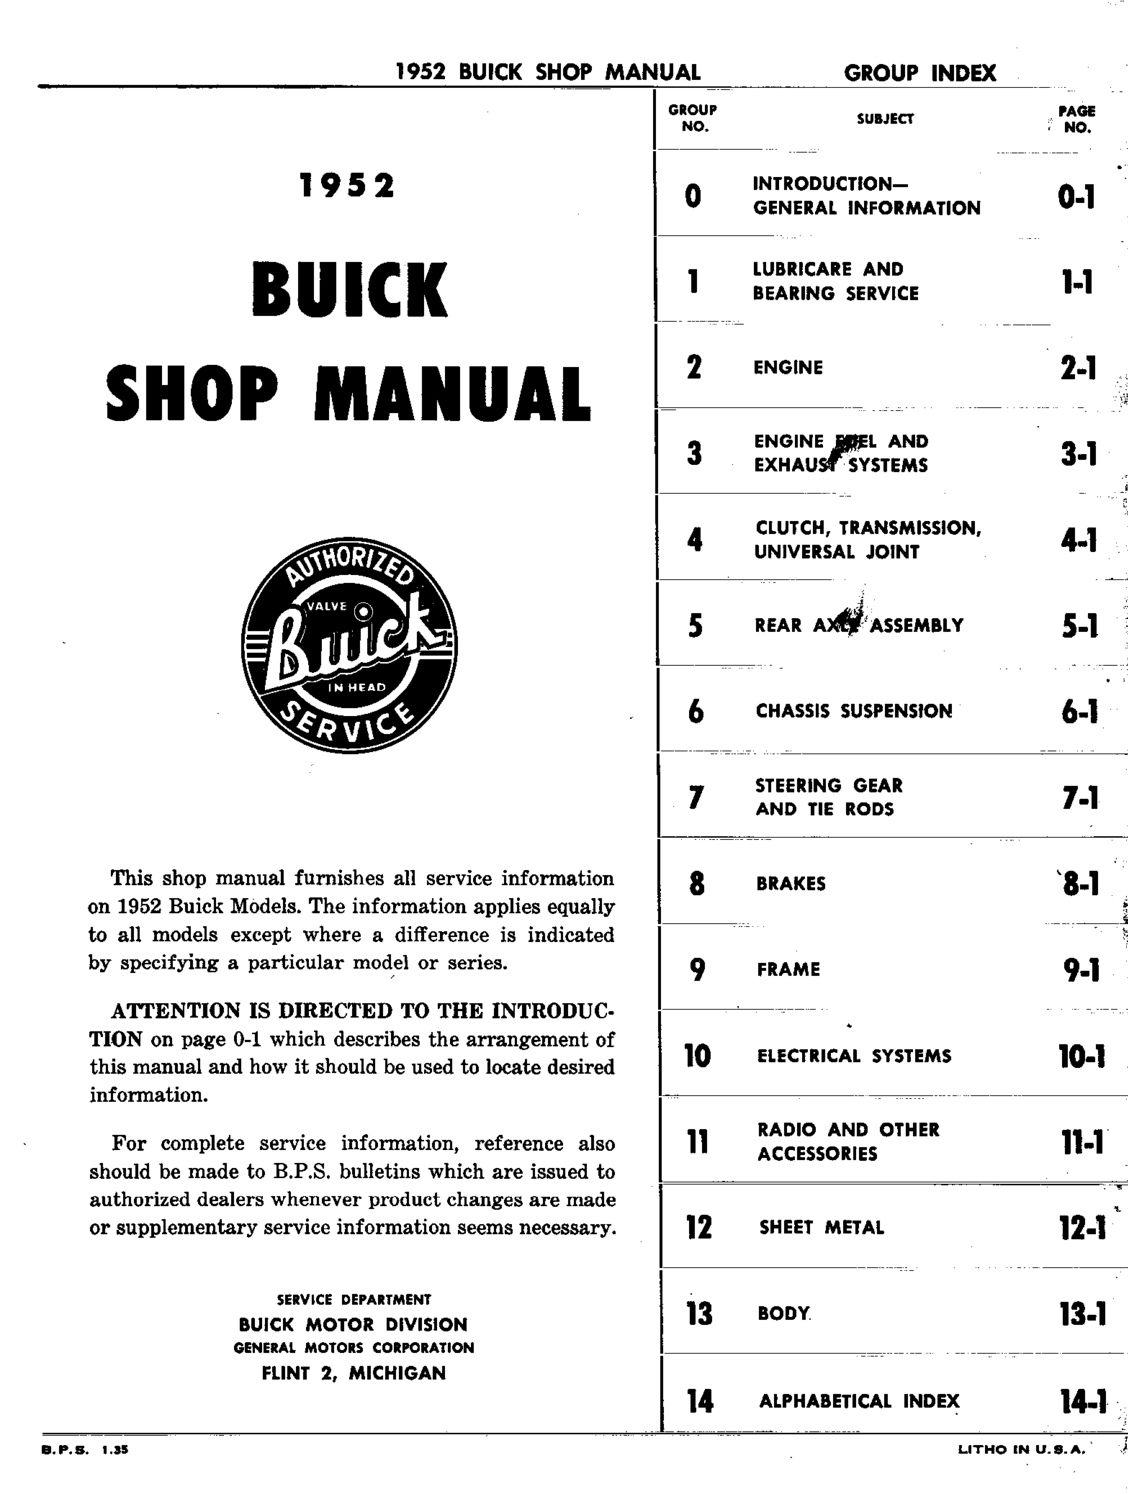 n_01 1952 Buick Shop Manual - Gen Information-001-001.jpg